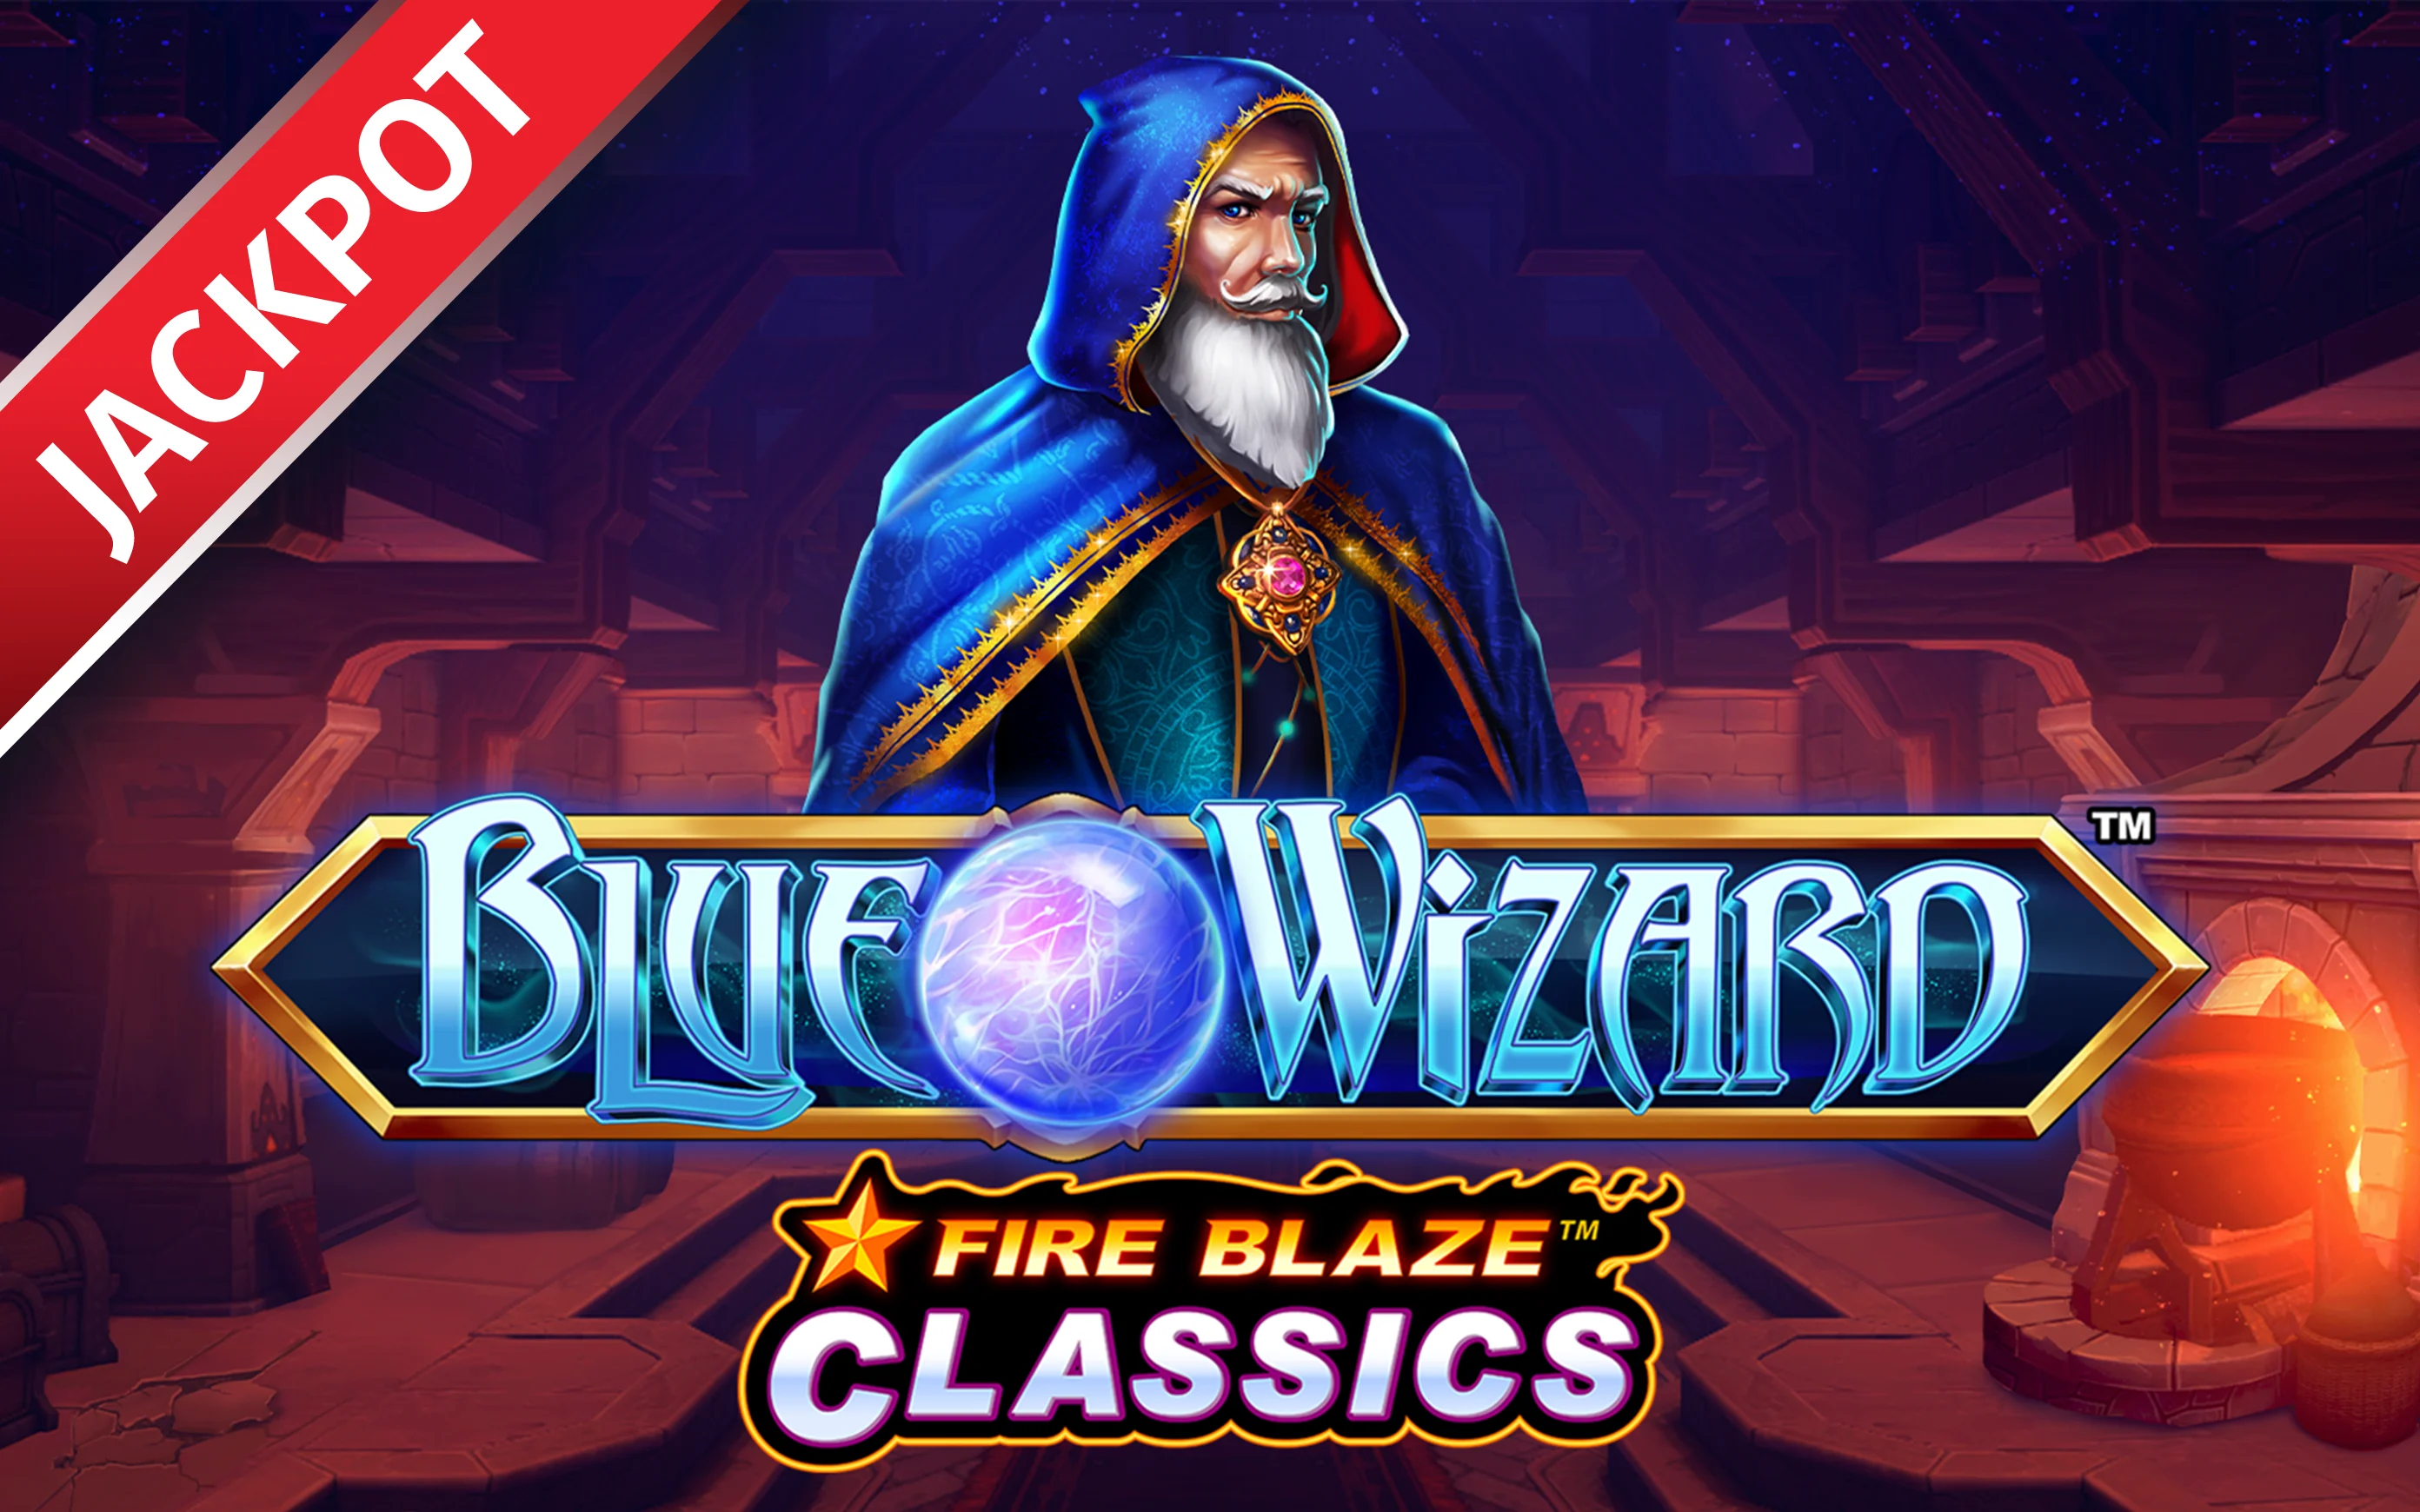 Play Blue Wizard on Starcasino.be online casino